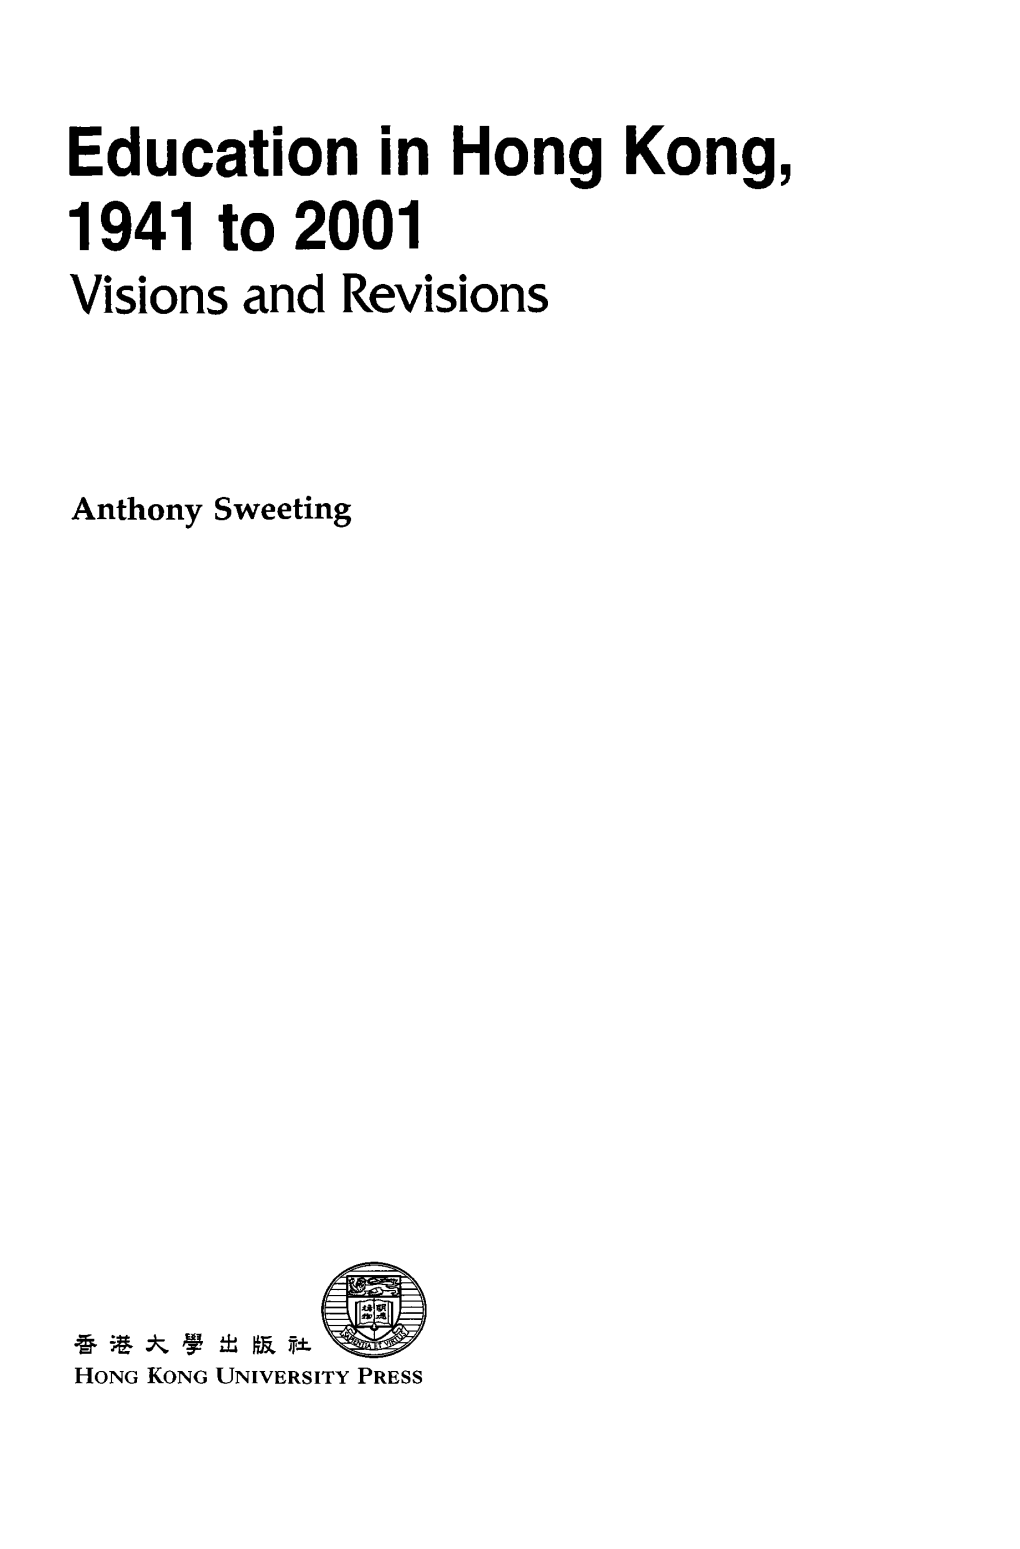 Education in Hong Kong, 1941 to 2001 Visions and Revisions